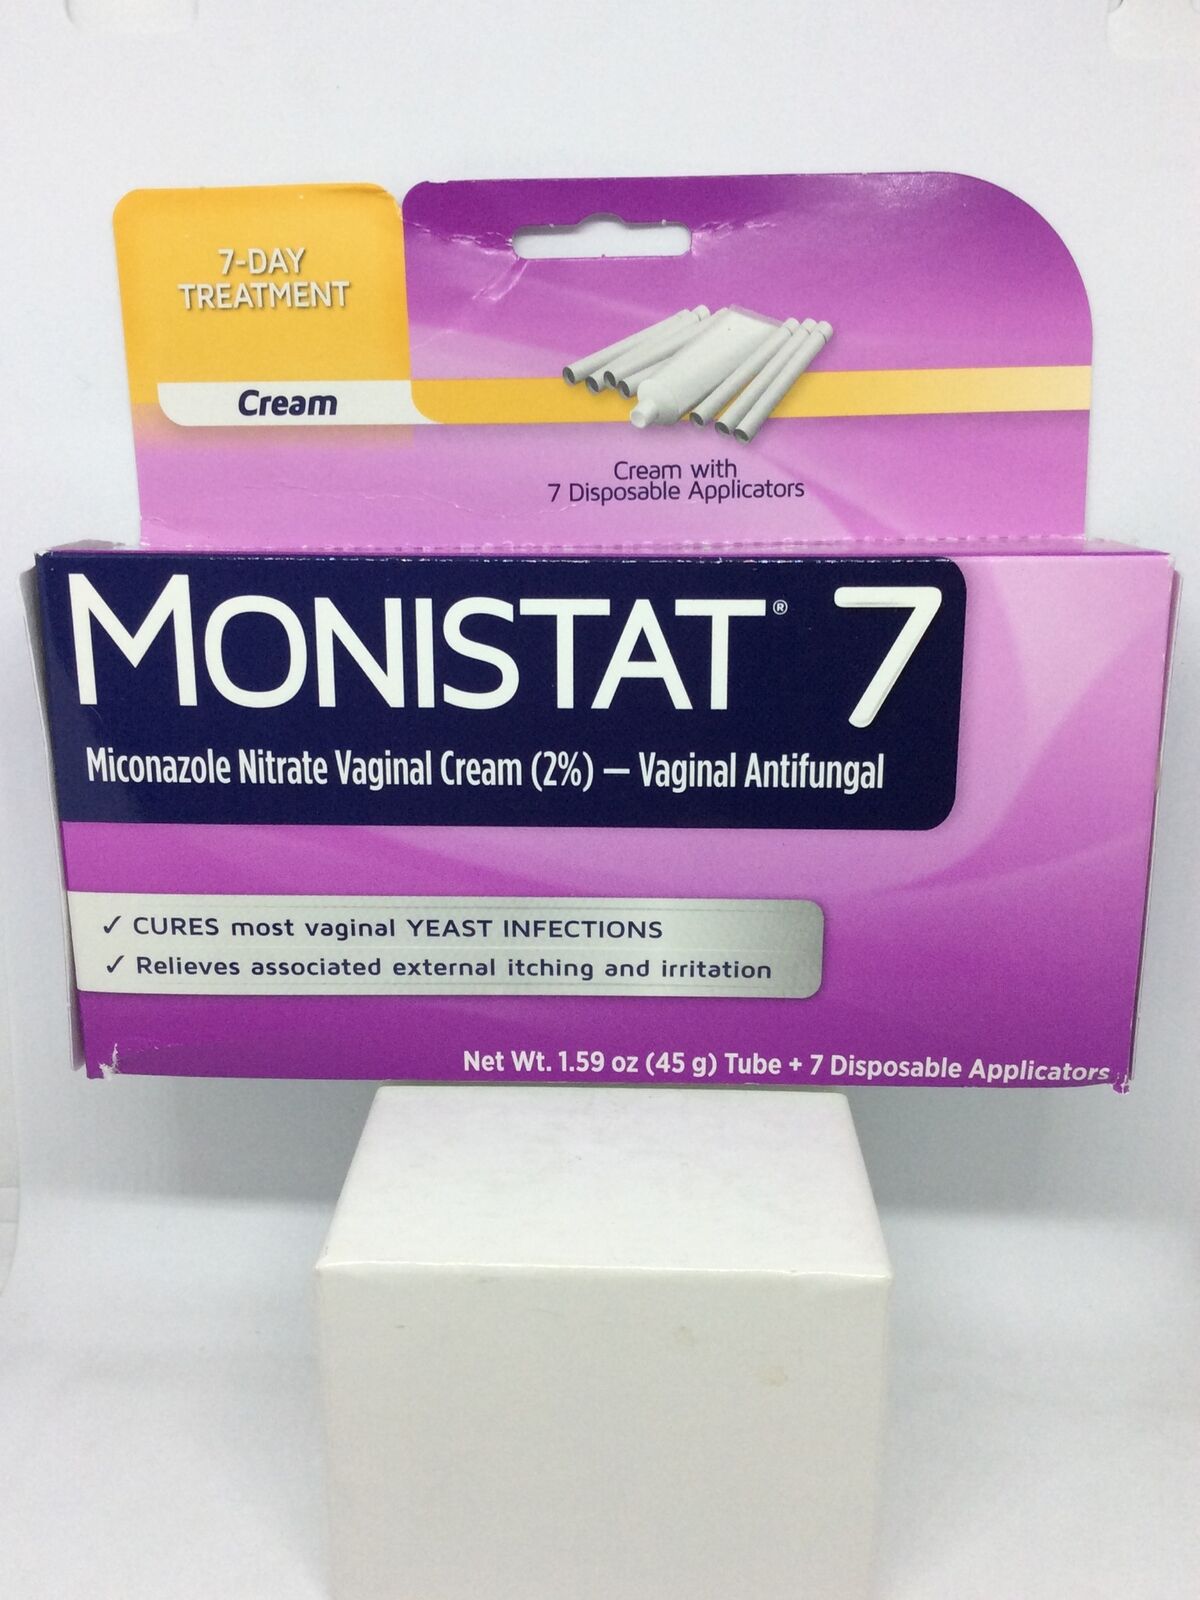 New In Dented Box Monistat 7 Miconazole Nitrate Vaginal Antifungal Cream Ex 2/24